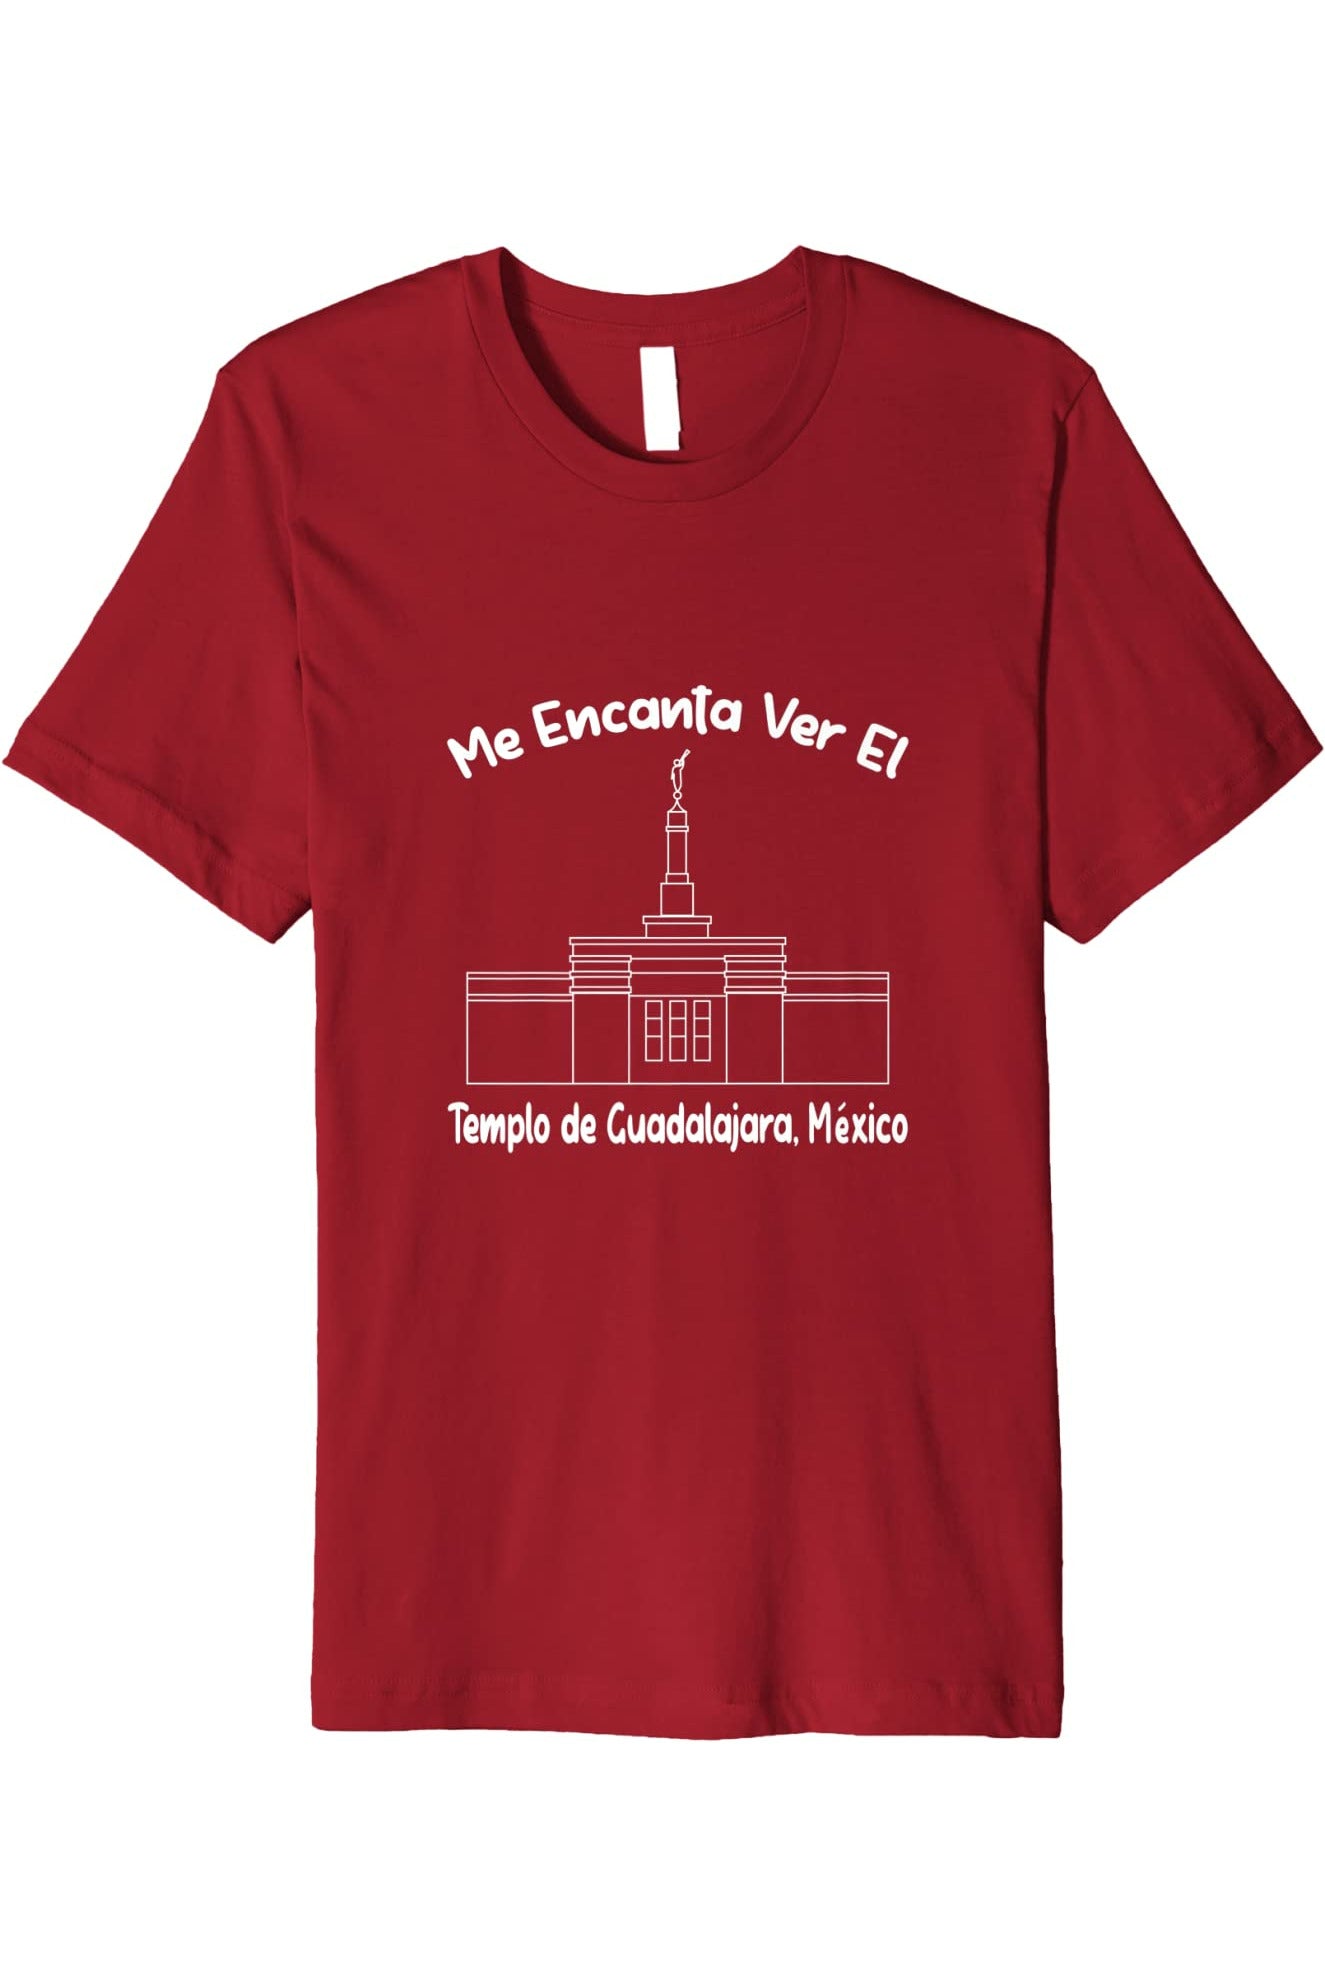 Guadalajara Mexico Temple T-Shirt - Premium - Primary Style (Spanish) US